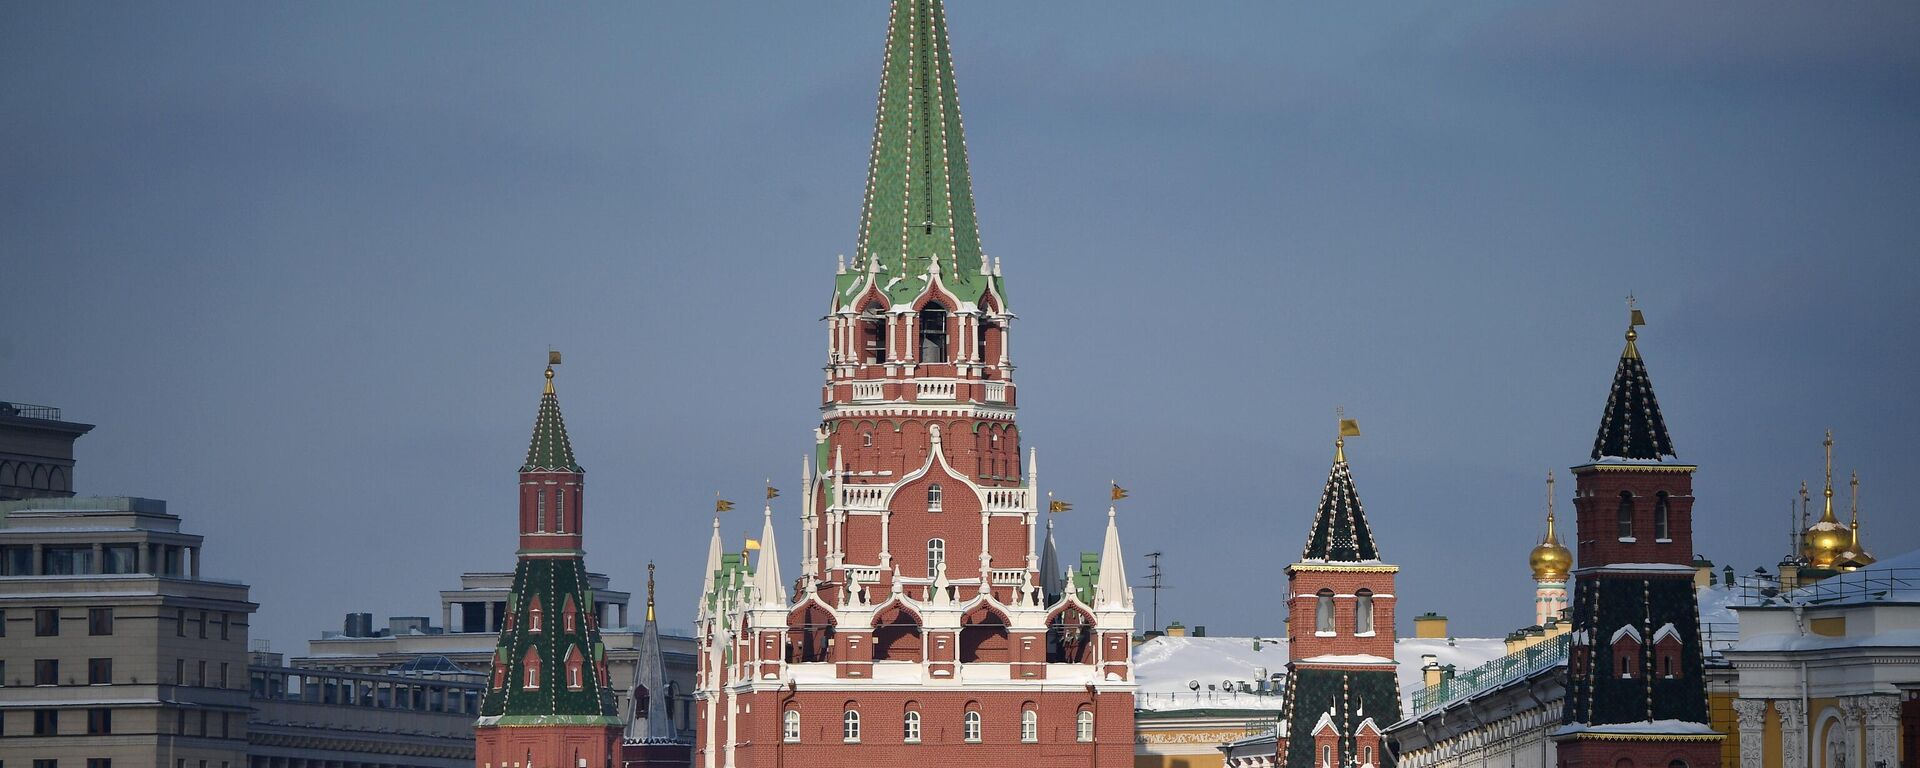 El Kremlin de Moscú, Rusia - Sputnik Mundo, 1920, 18.11.2021